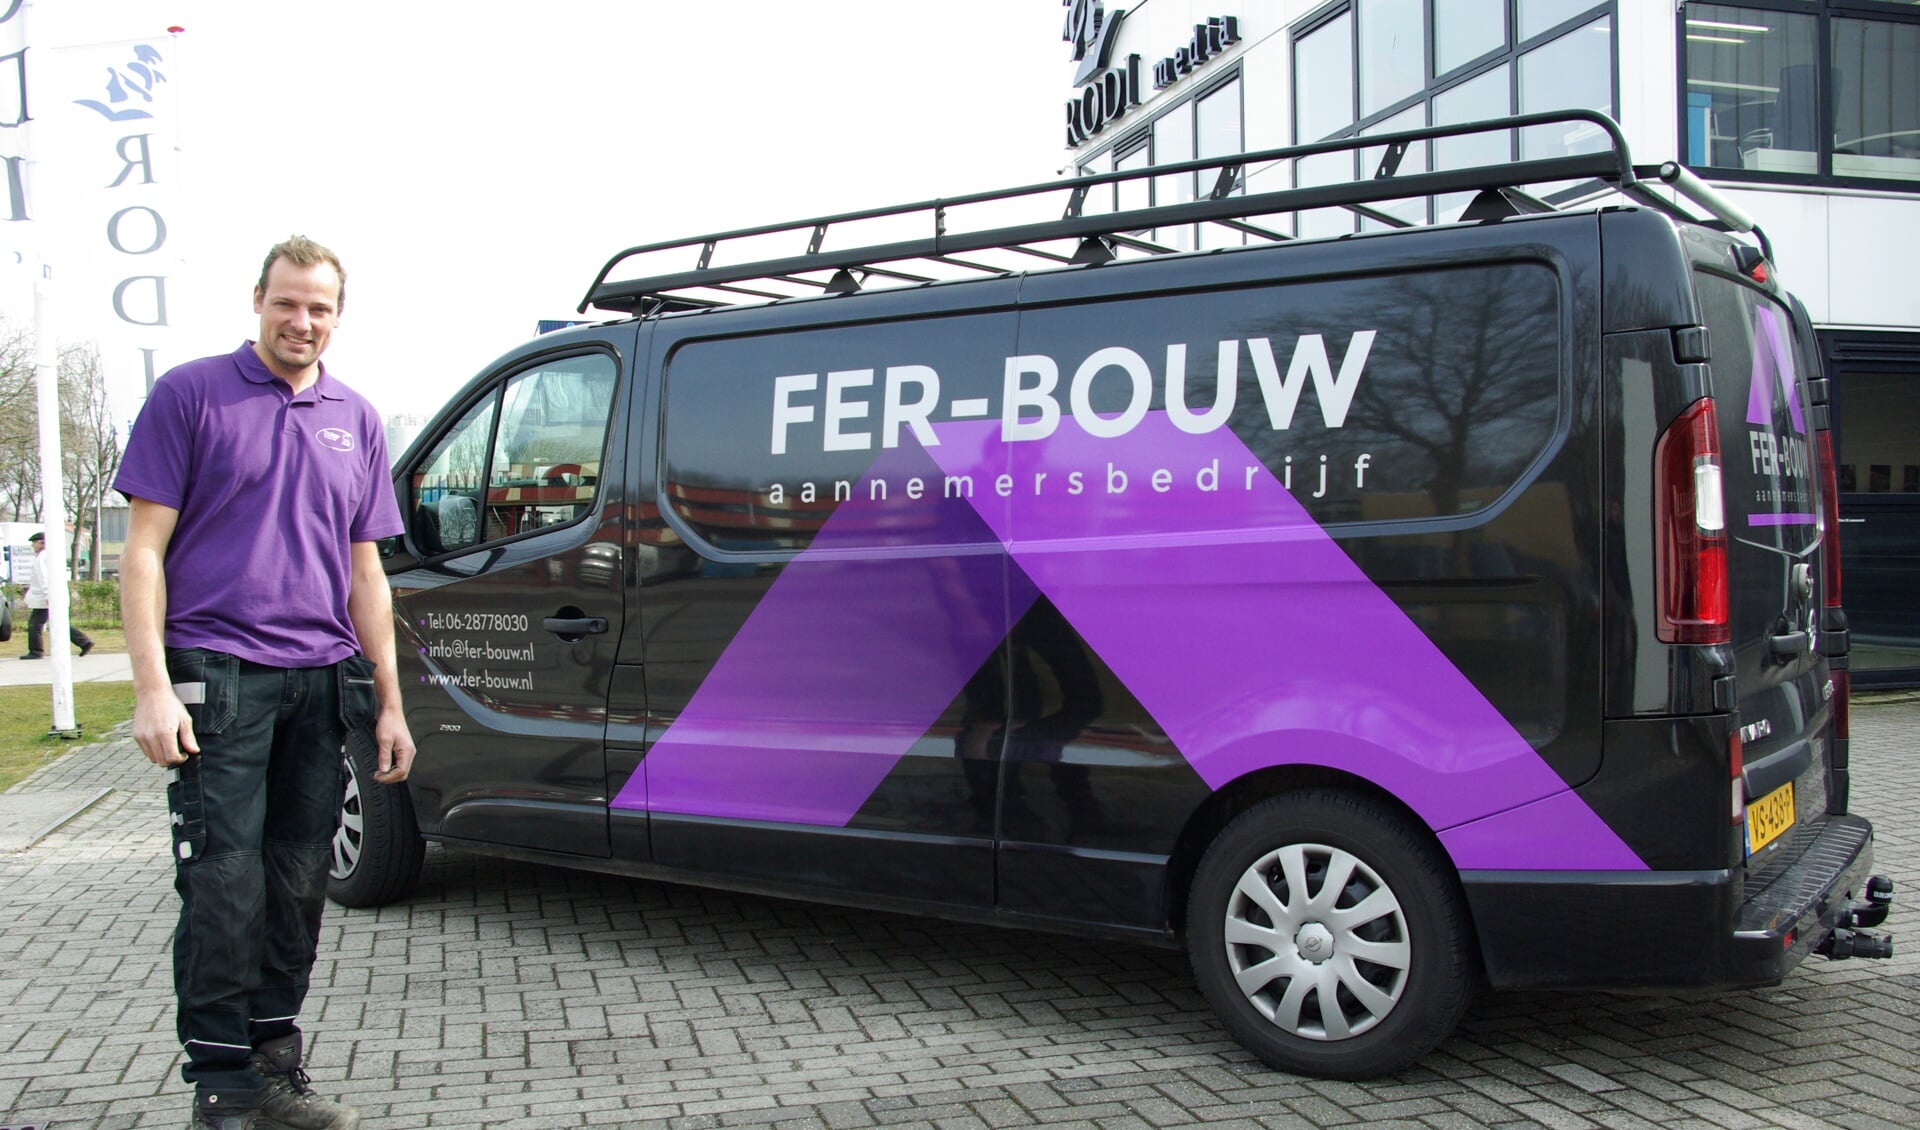 Ference de Koster van Fer-Bouw en de onlangs de RODI beletterde bedrijfsbus. 